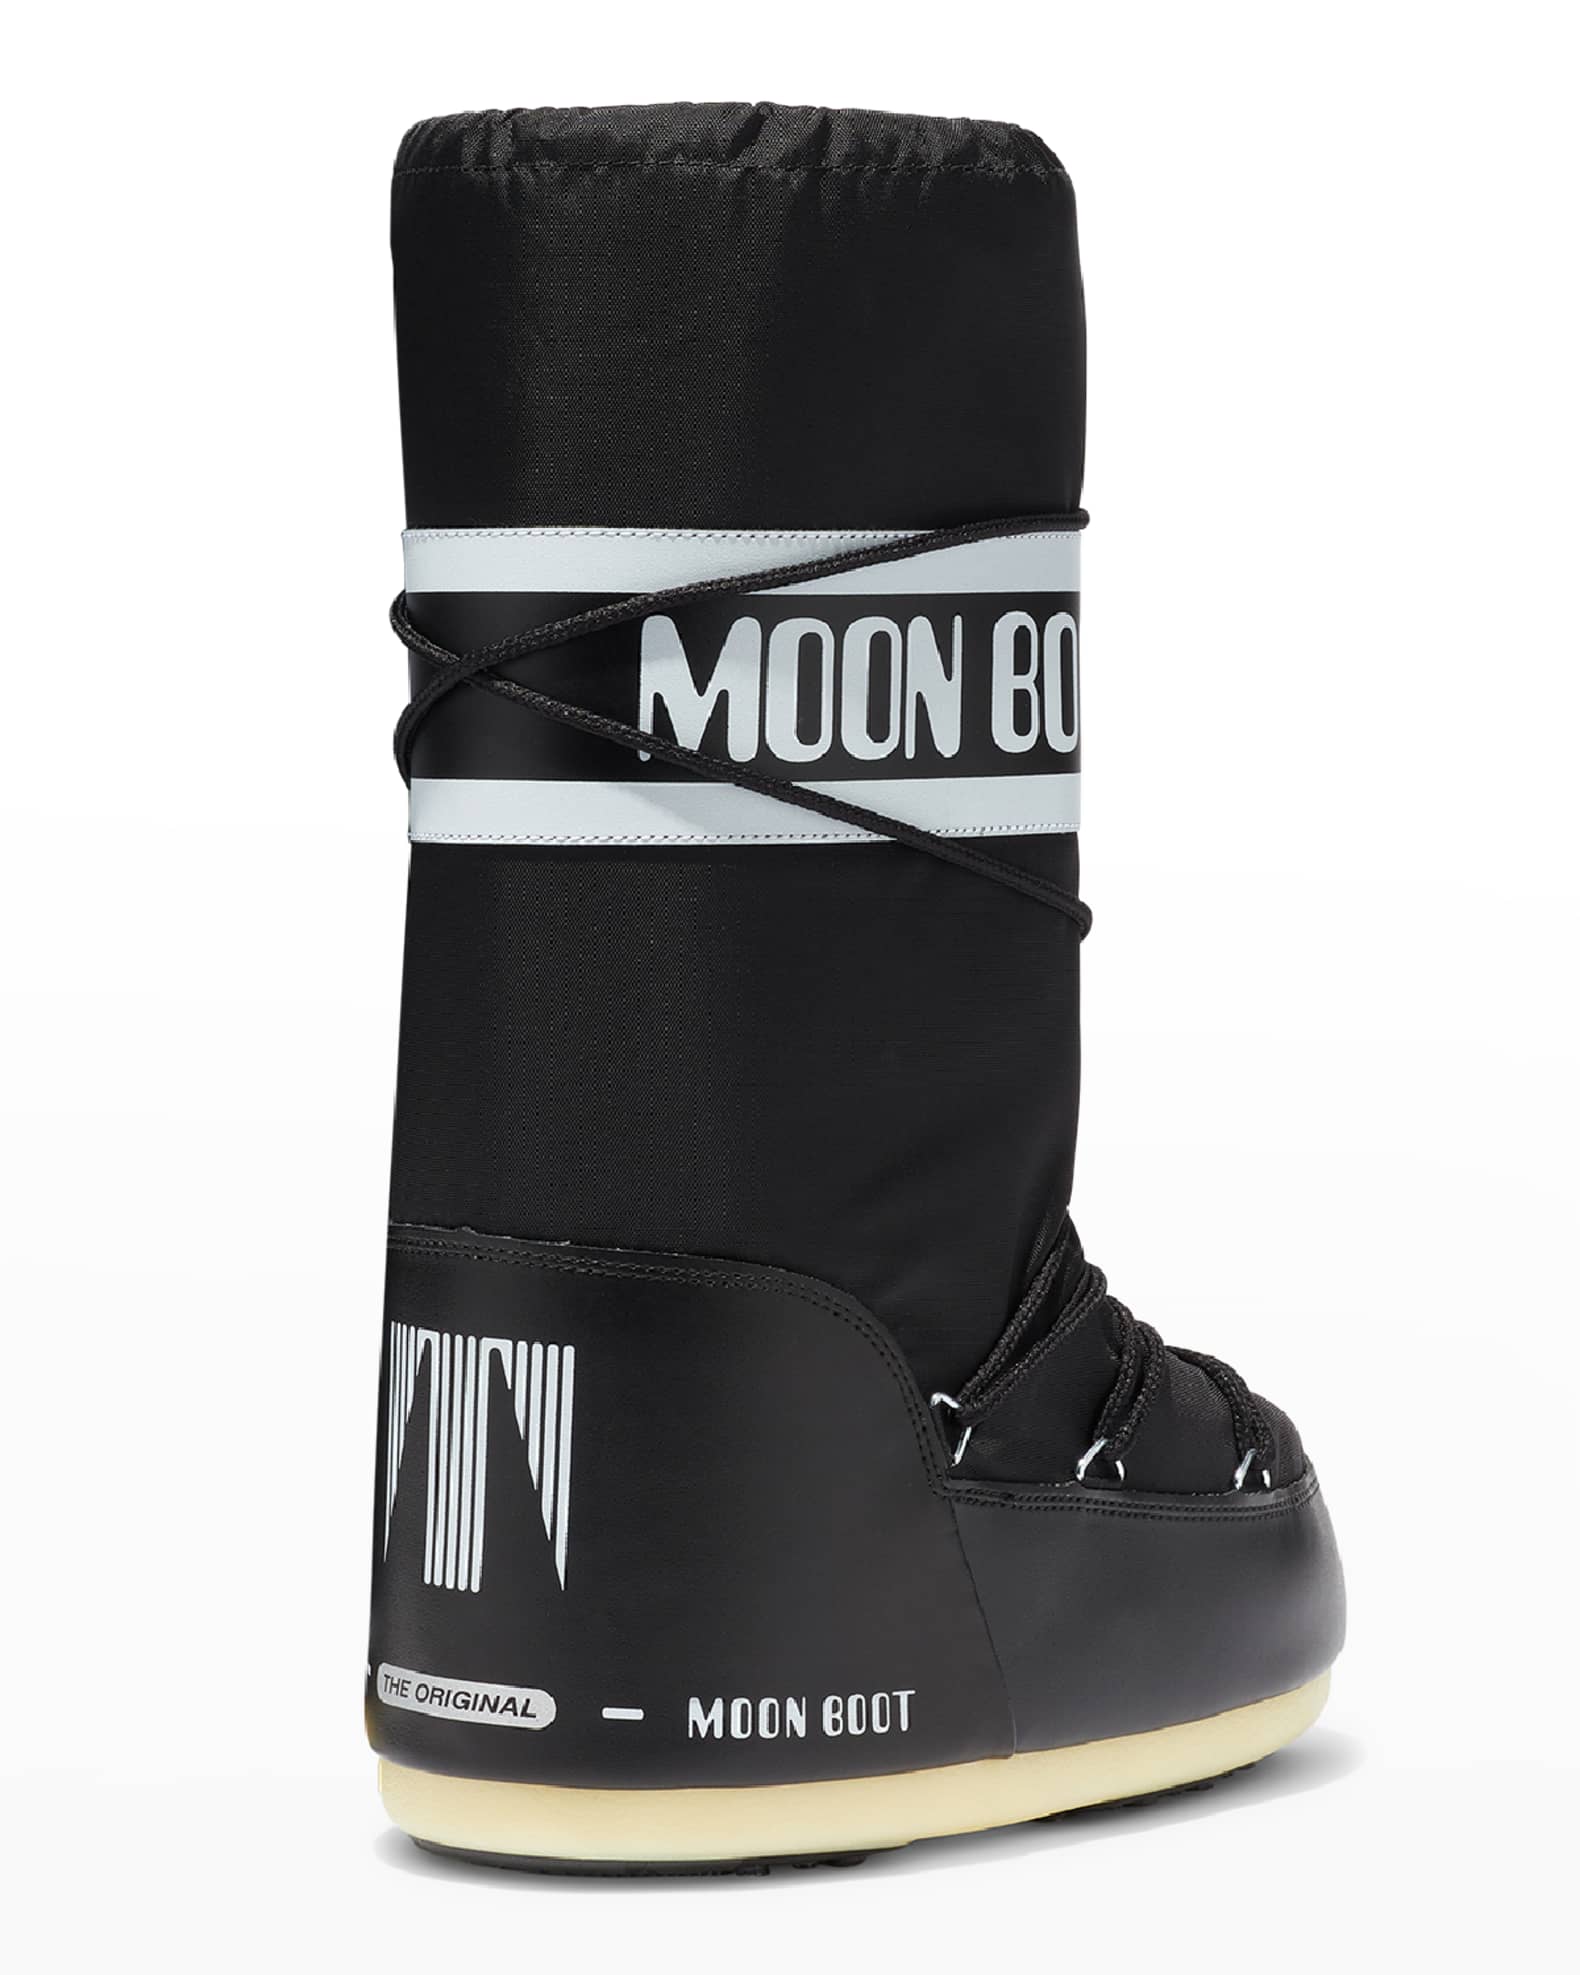 Moon Boot Nylon Snow Boots